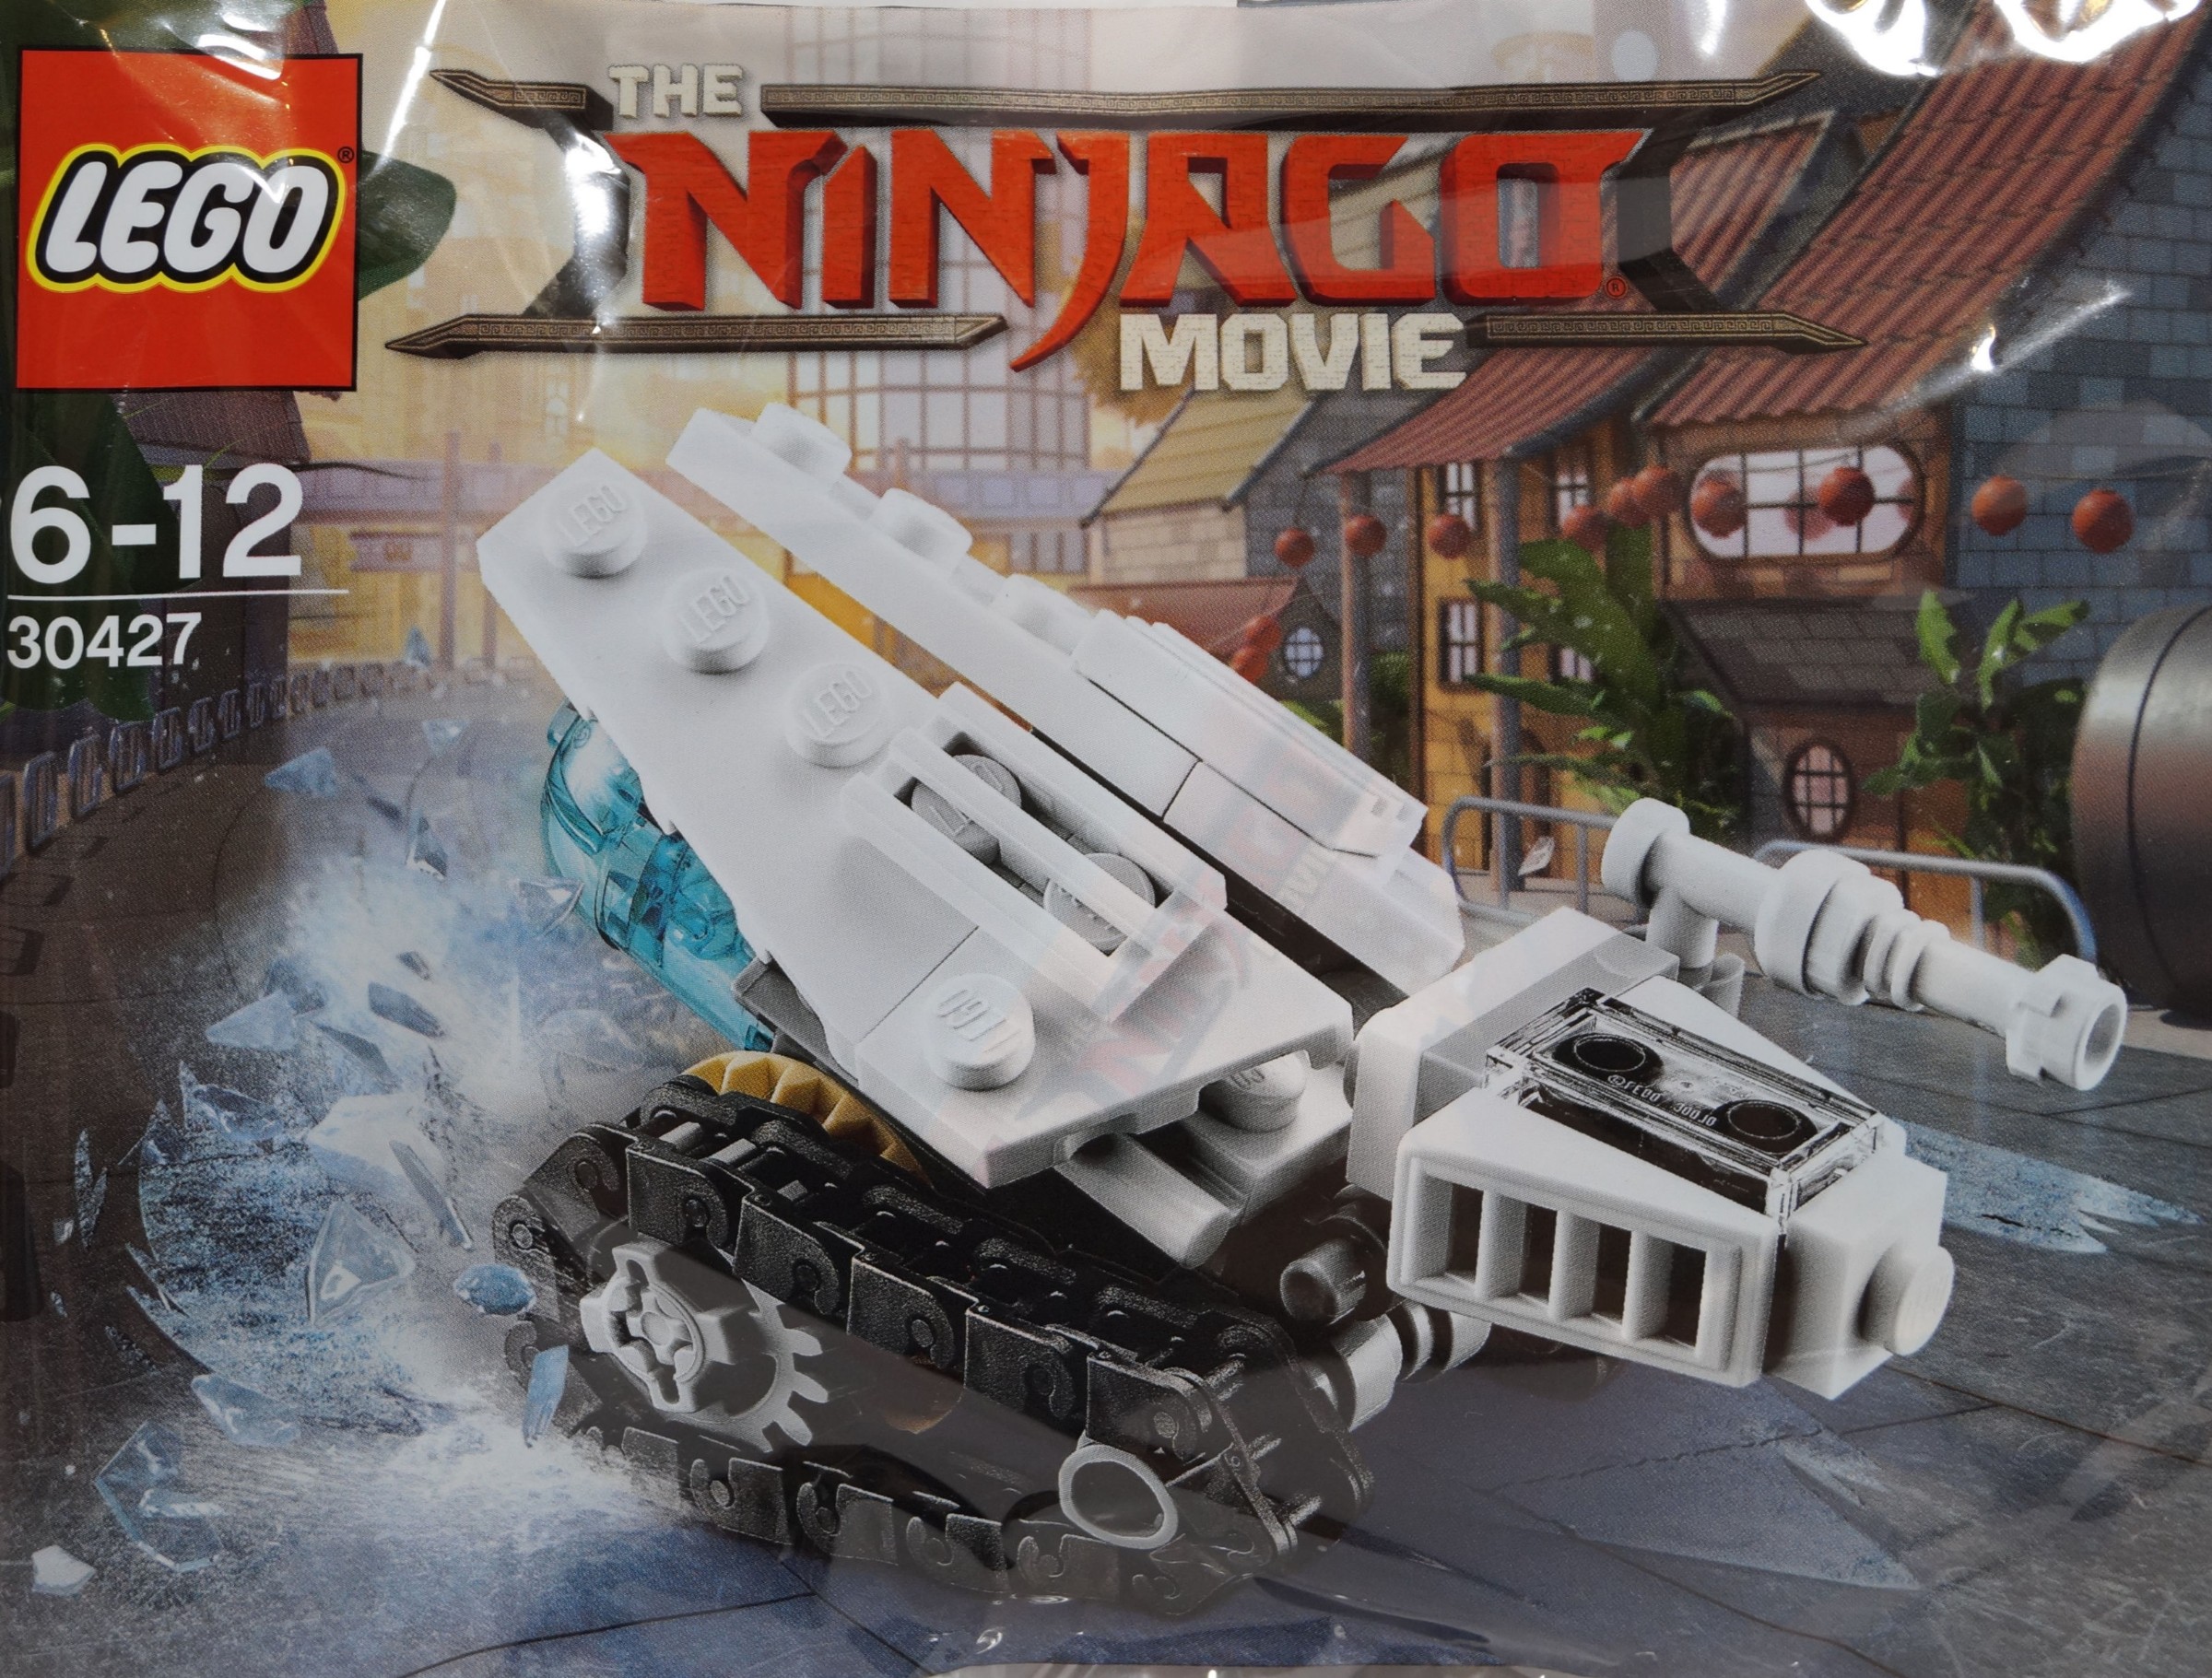 Secretar Rubí Ver insectos LEGO The LEGO Ninjago Movie | Brickset